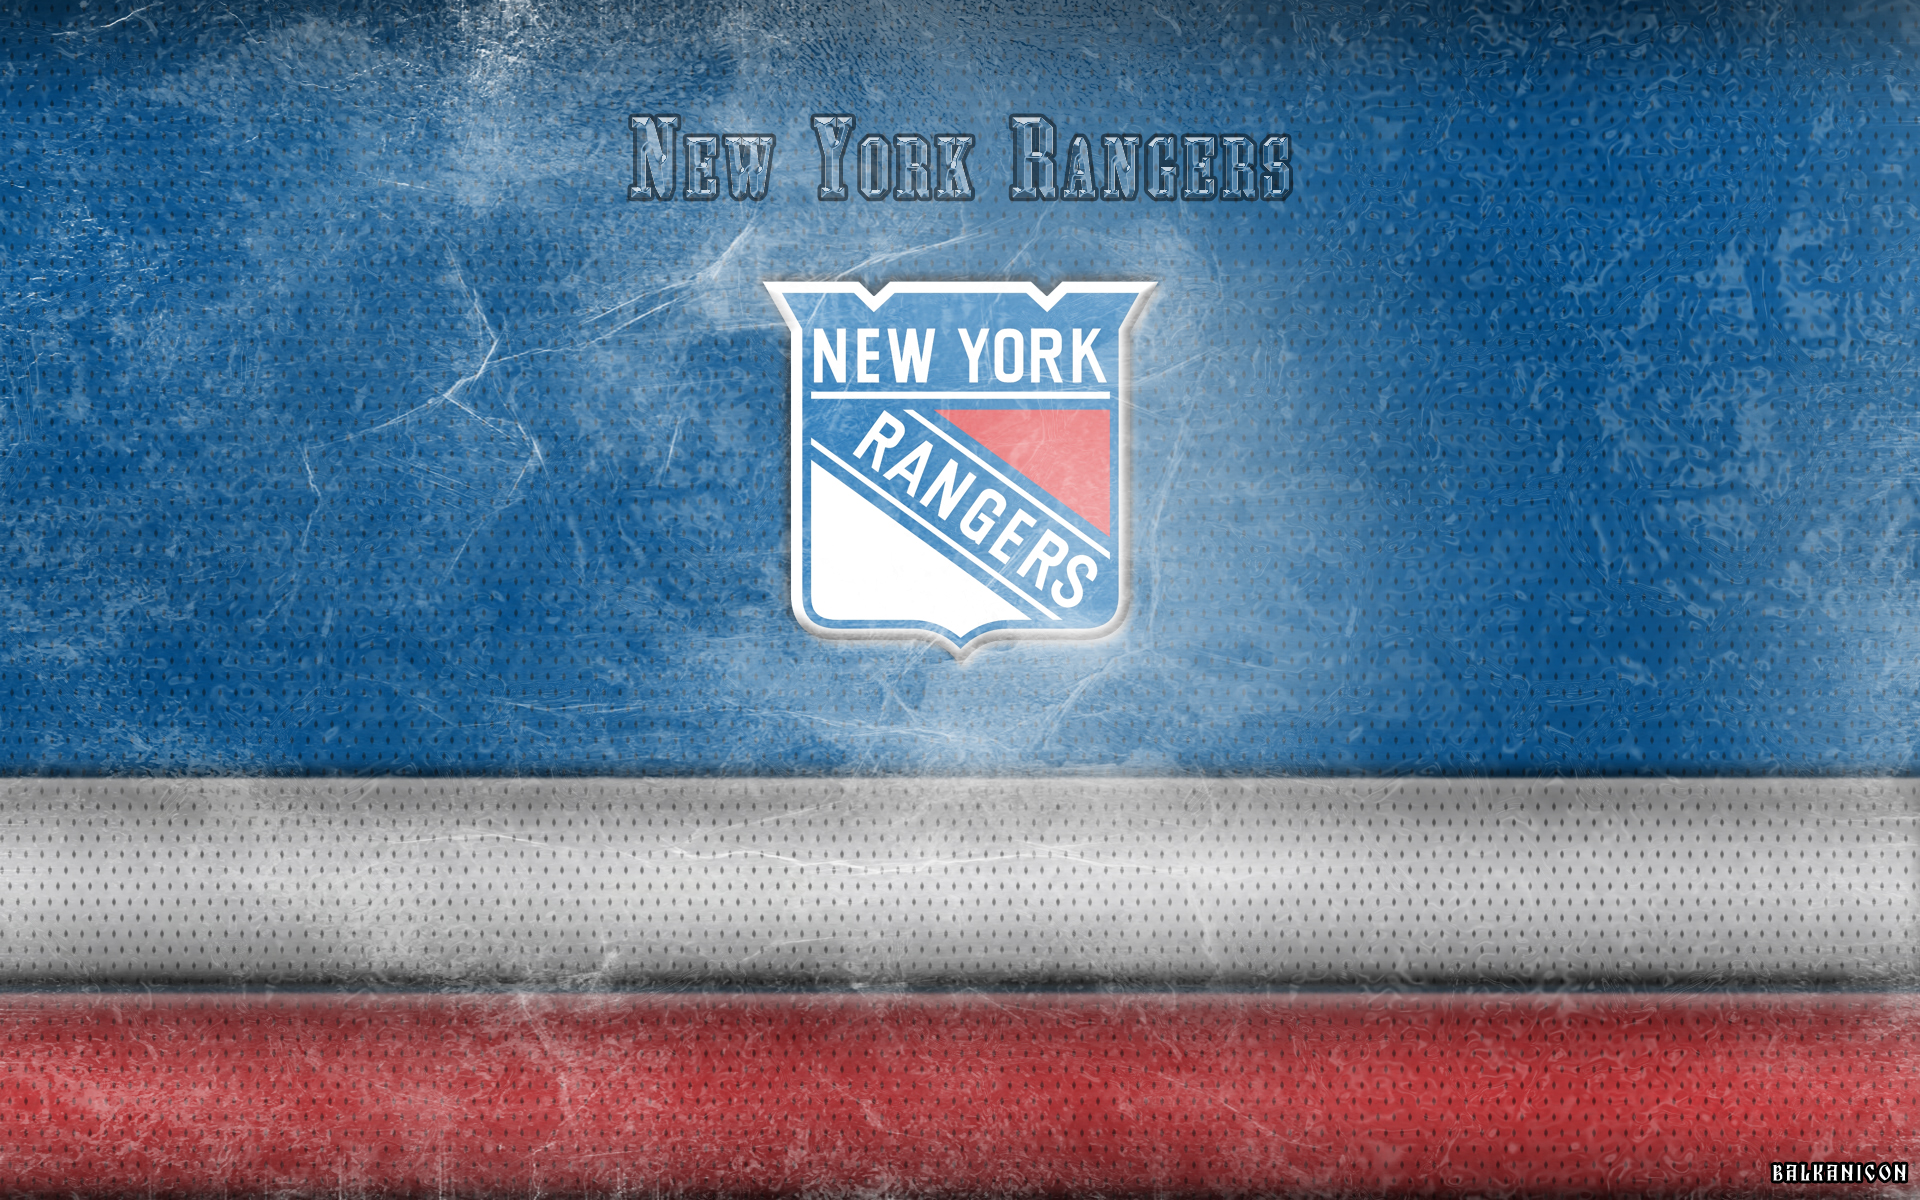 New York Rangers Wallpaper By Balkanicon